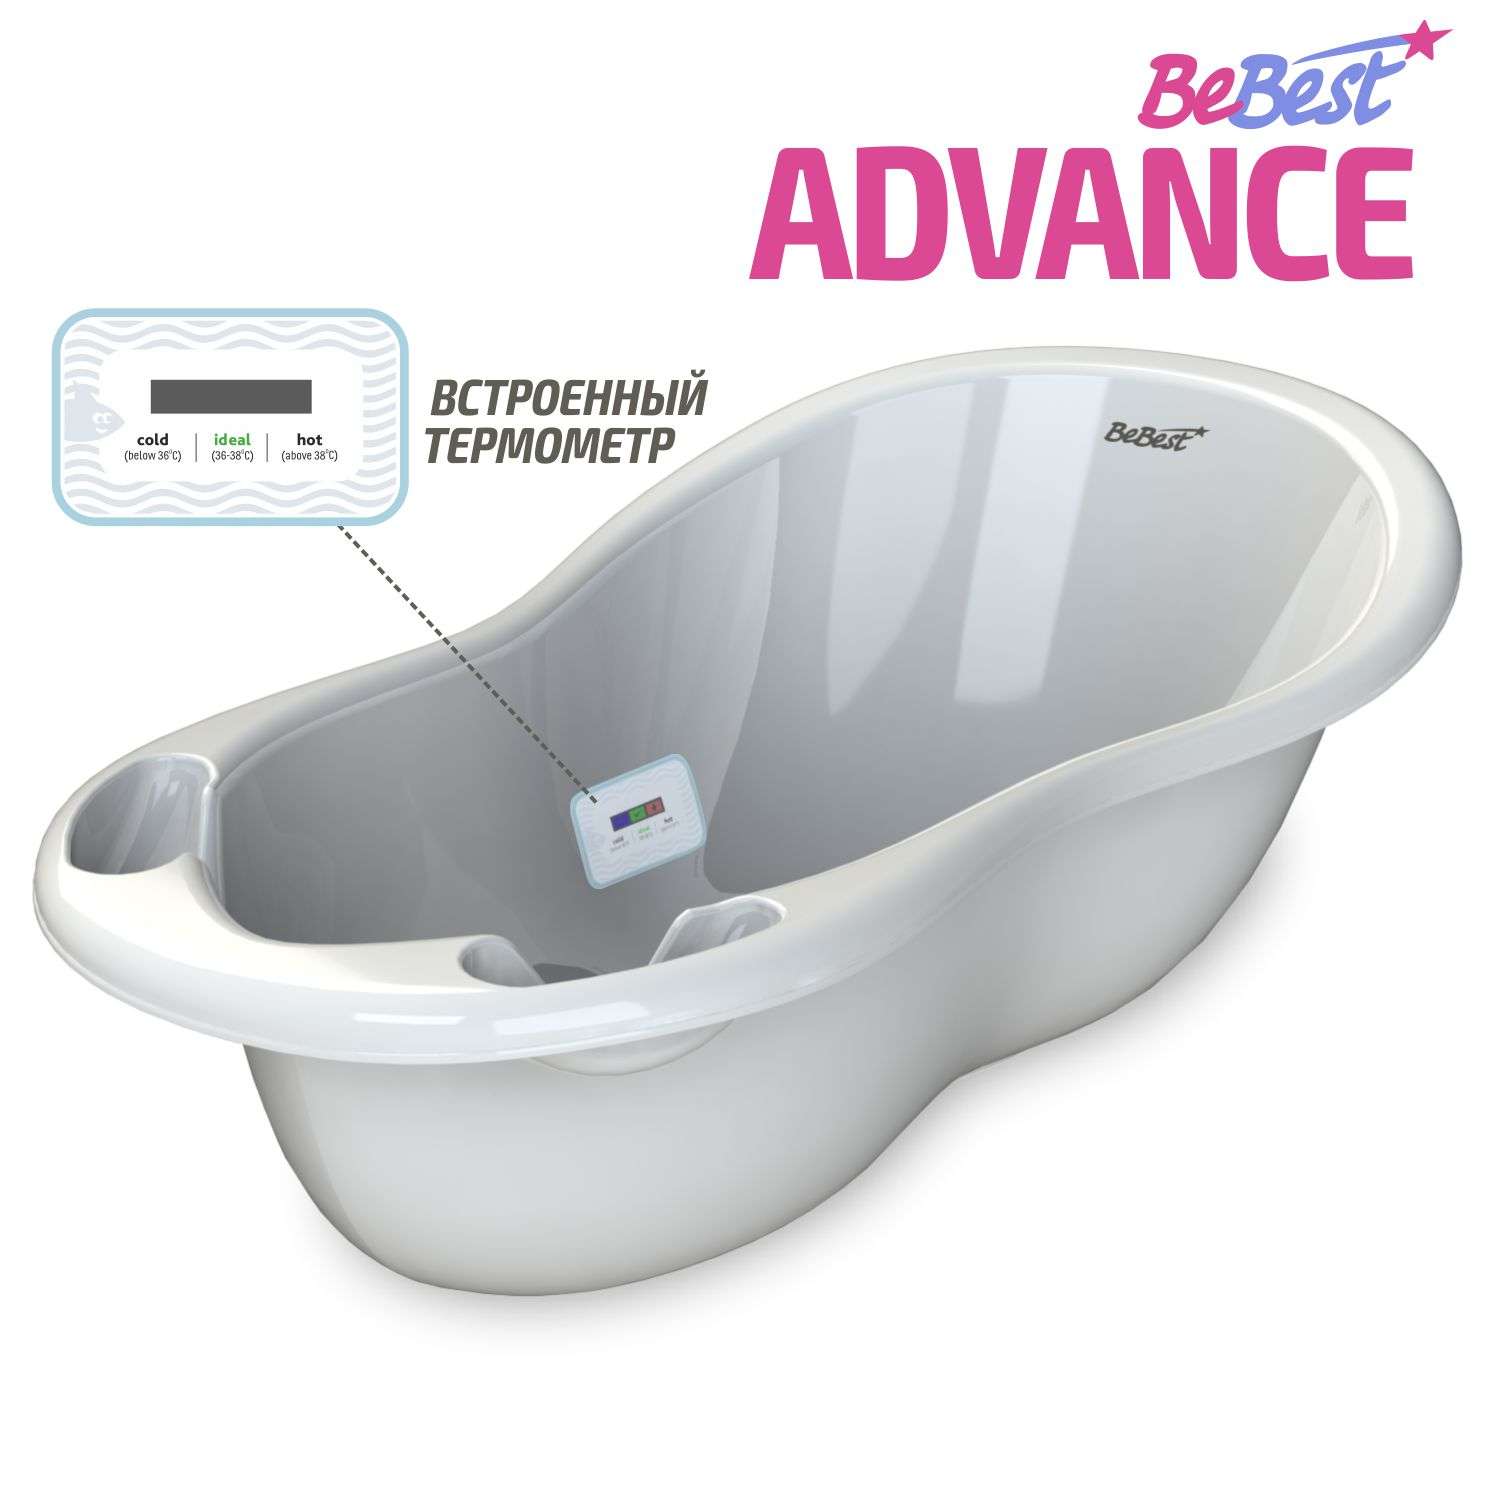 Ванночка для купания BeBest Advance с термометром белый - фото 1